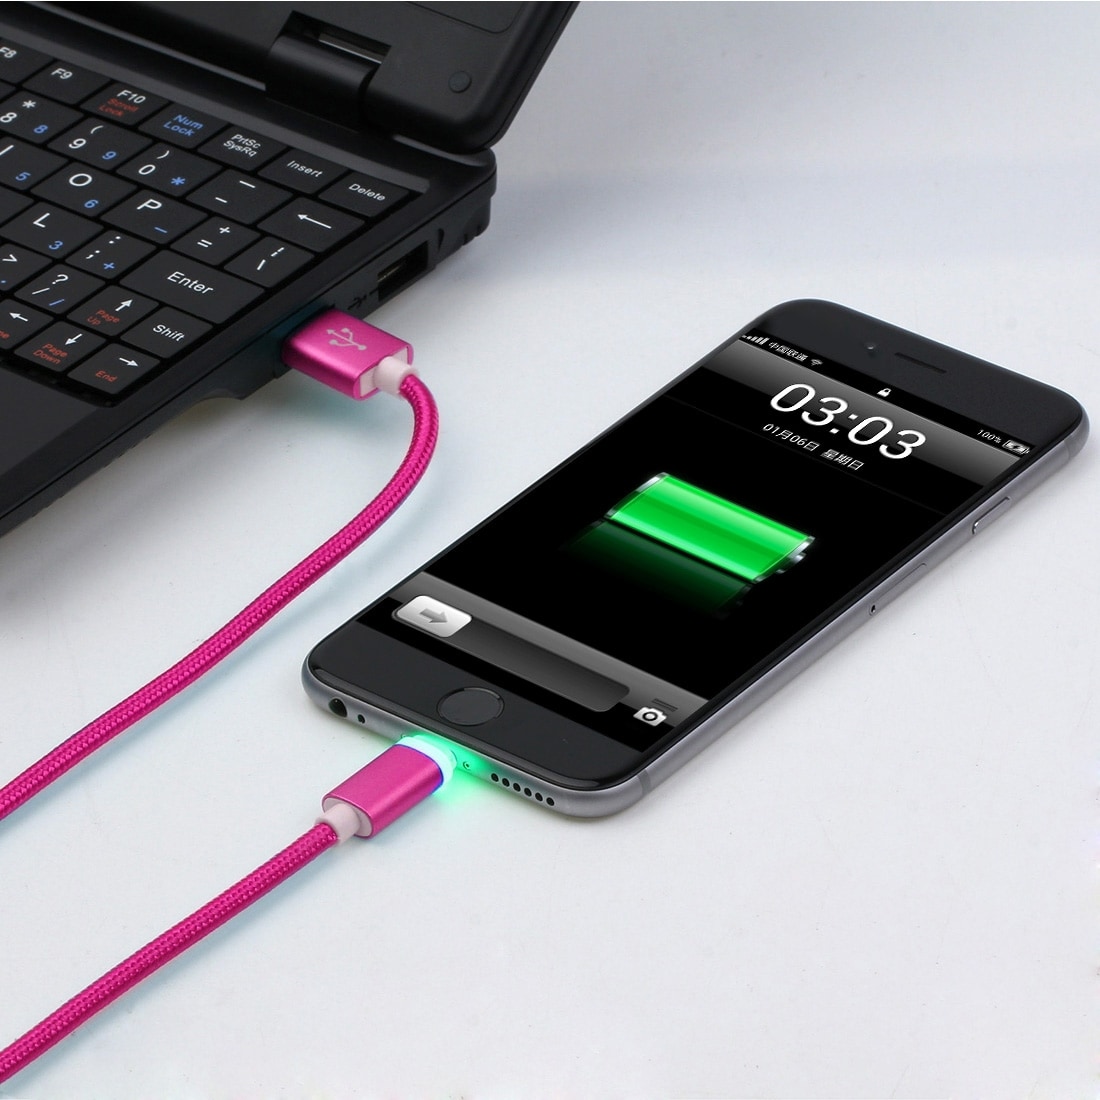 Stryktålig tygbeklädd Usbkabel iPhone 5/6/7 med metallhuvud - Storpack 8st i olika färger